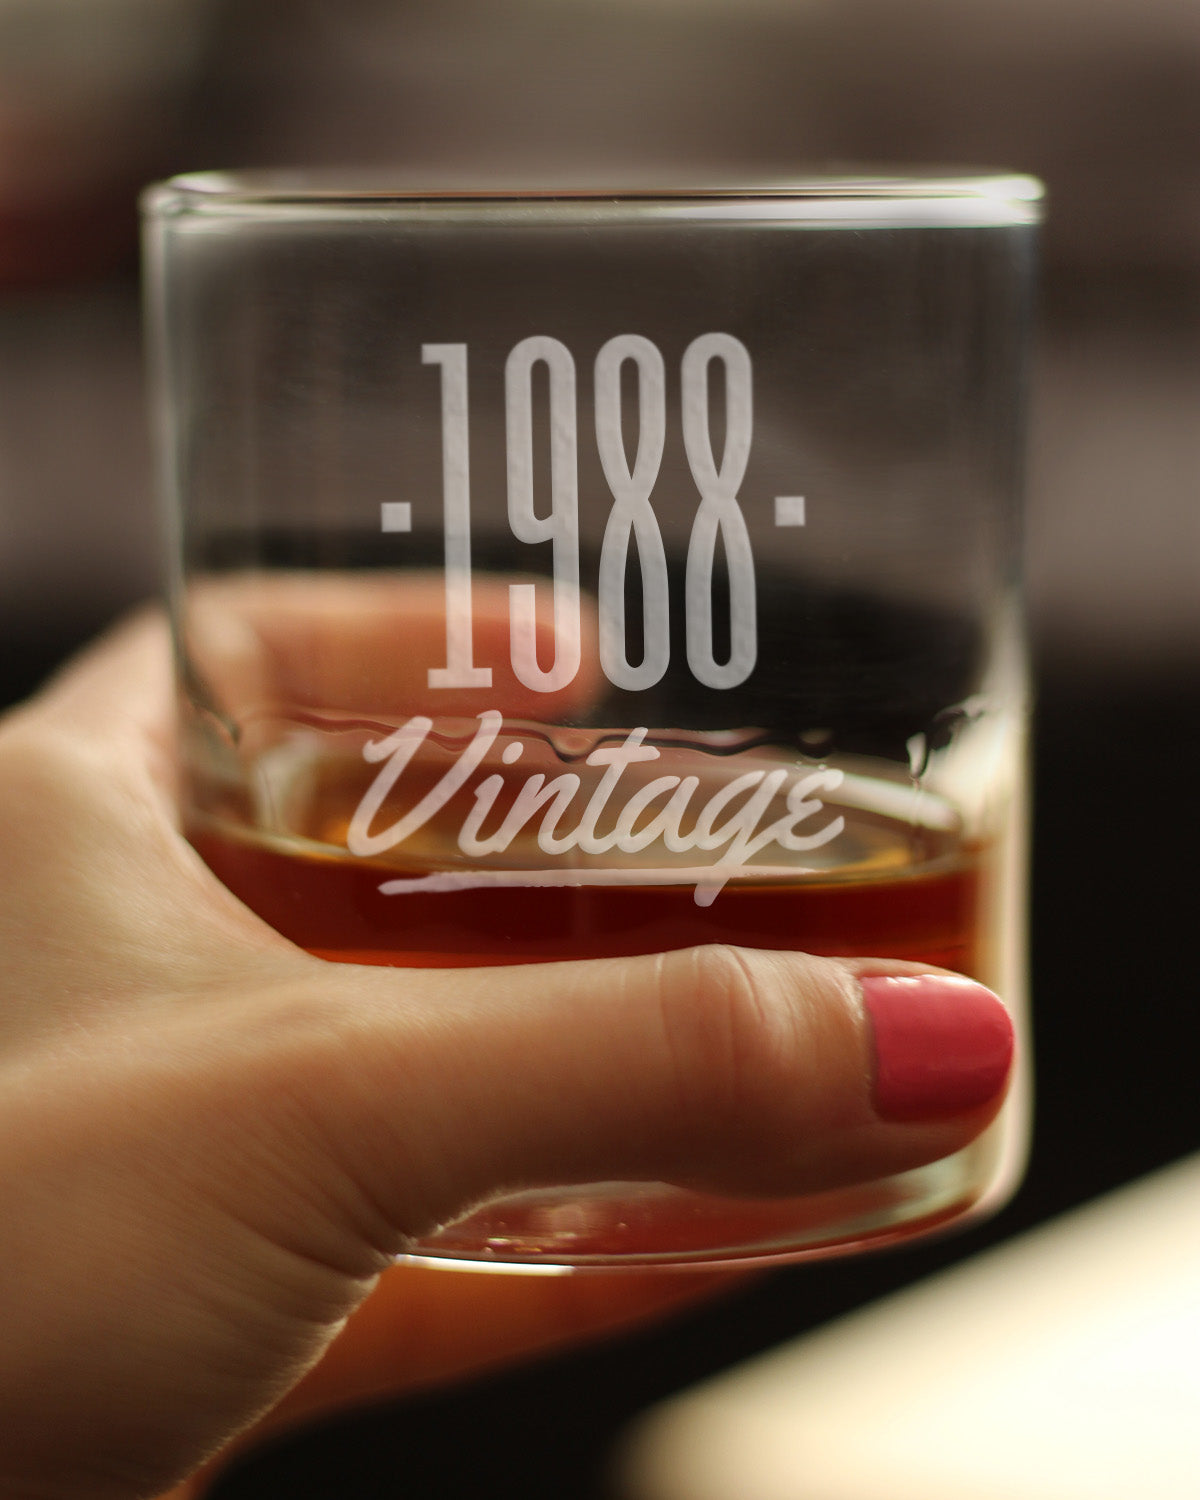 Vintage 1988 - Fun 35th Birthday Whiskey Rocks Glass Gifts for Men &amp; Women Turning 35 - Retro Whisky Drinking Tumbler